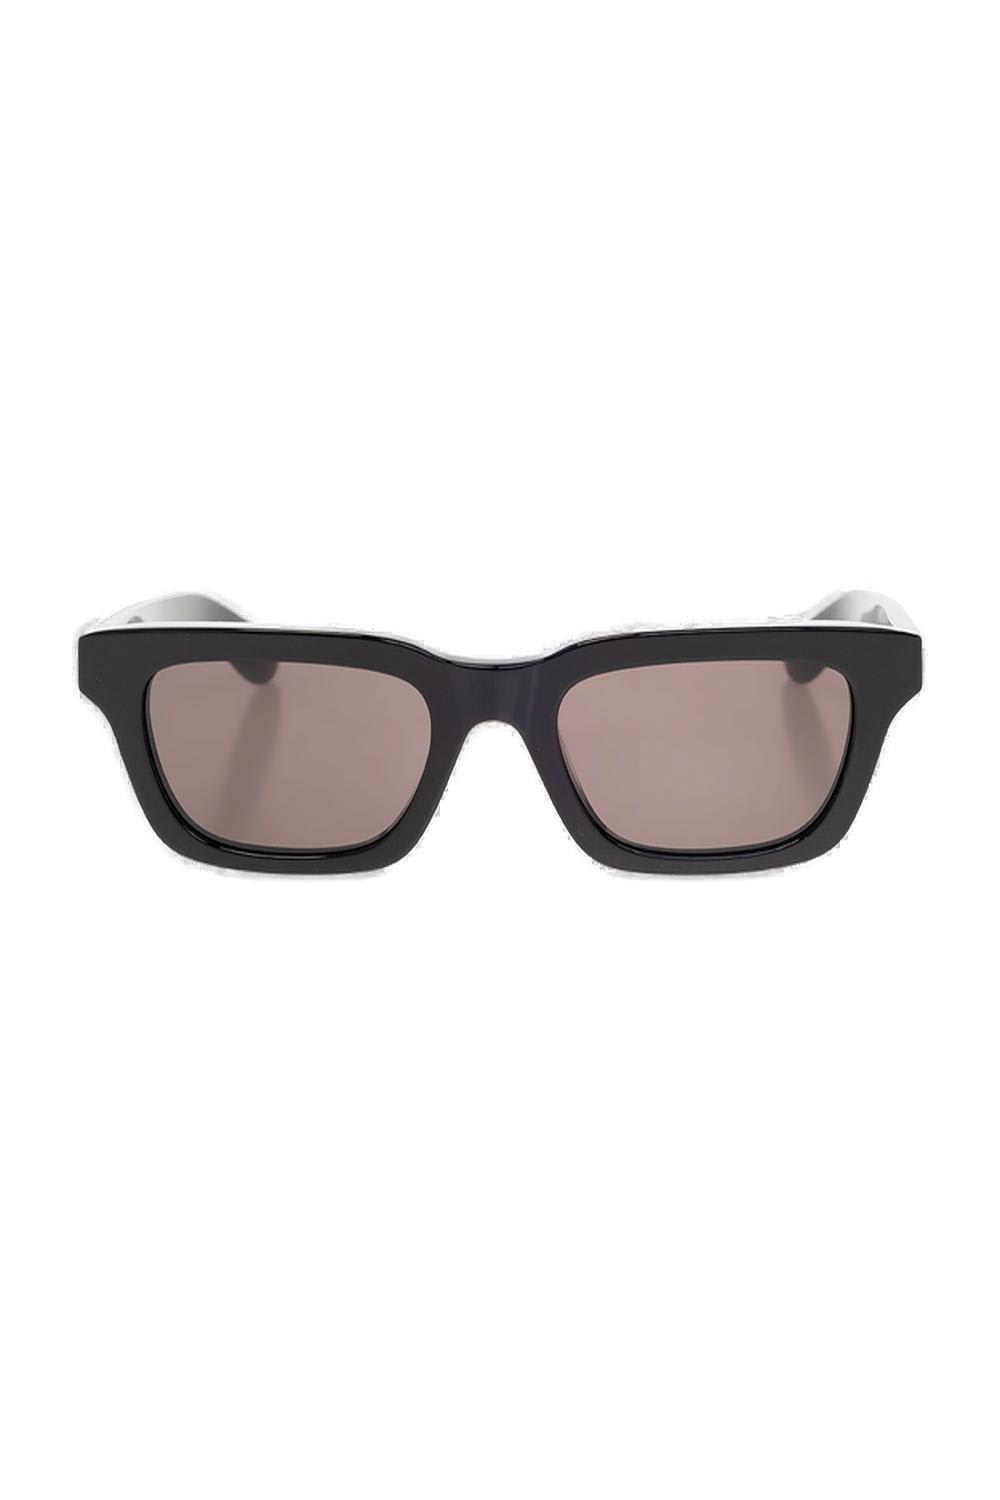 Alexander Mcqueen Square Frame Sunglasses In Black